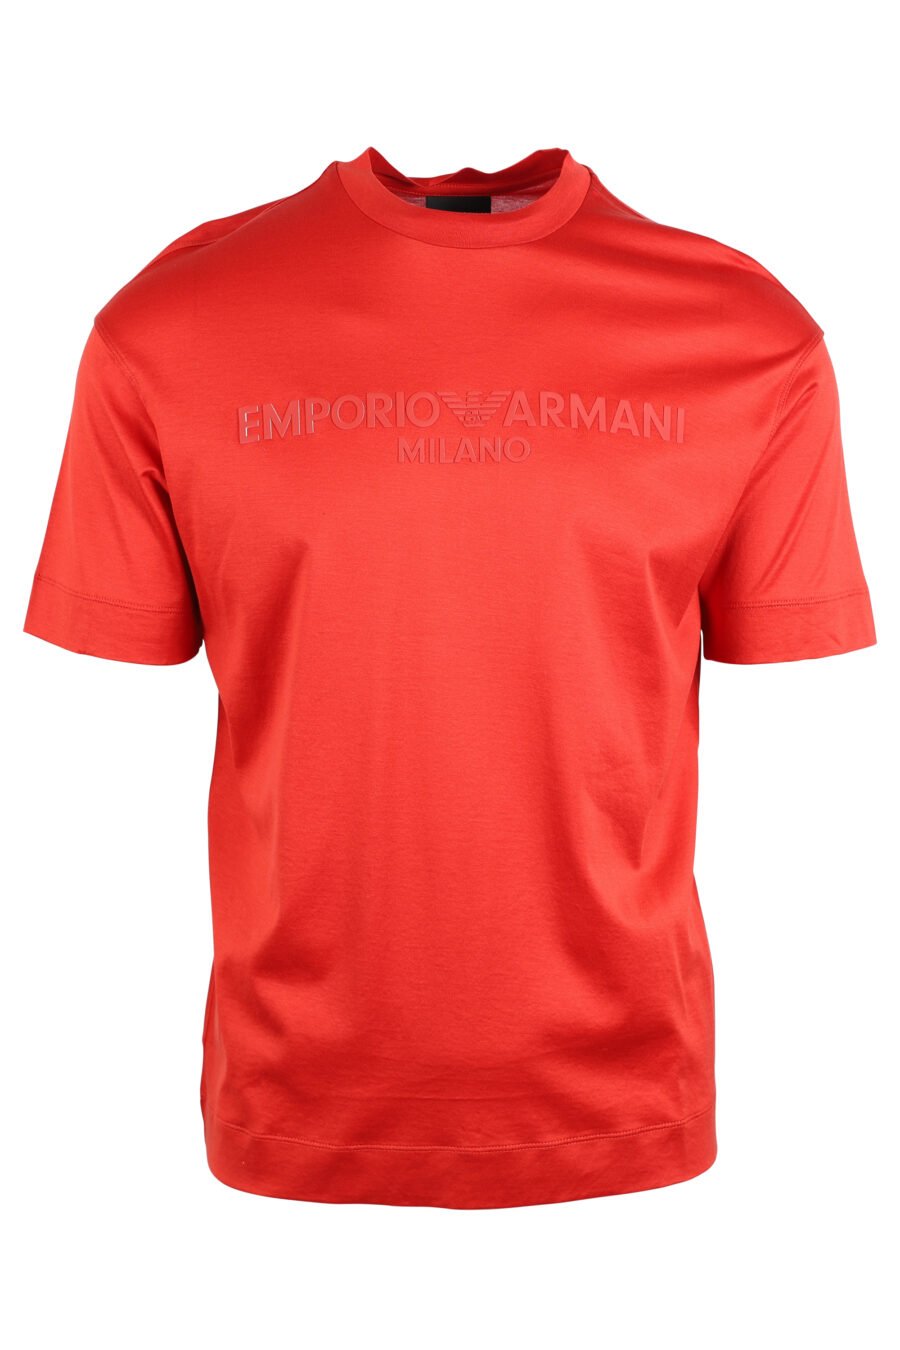 Red T-shirt with monochrome maxilogo - IMG 4747